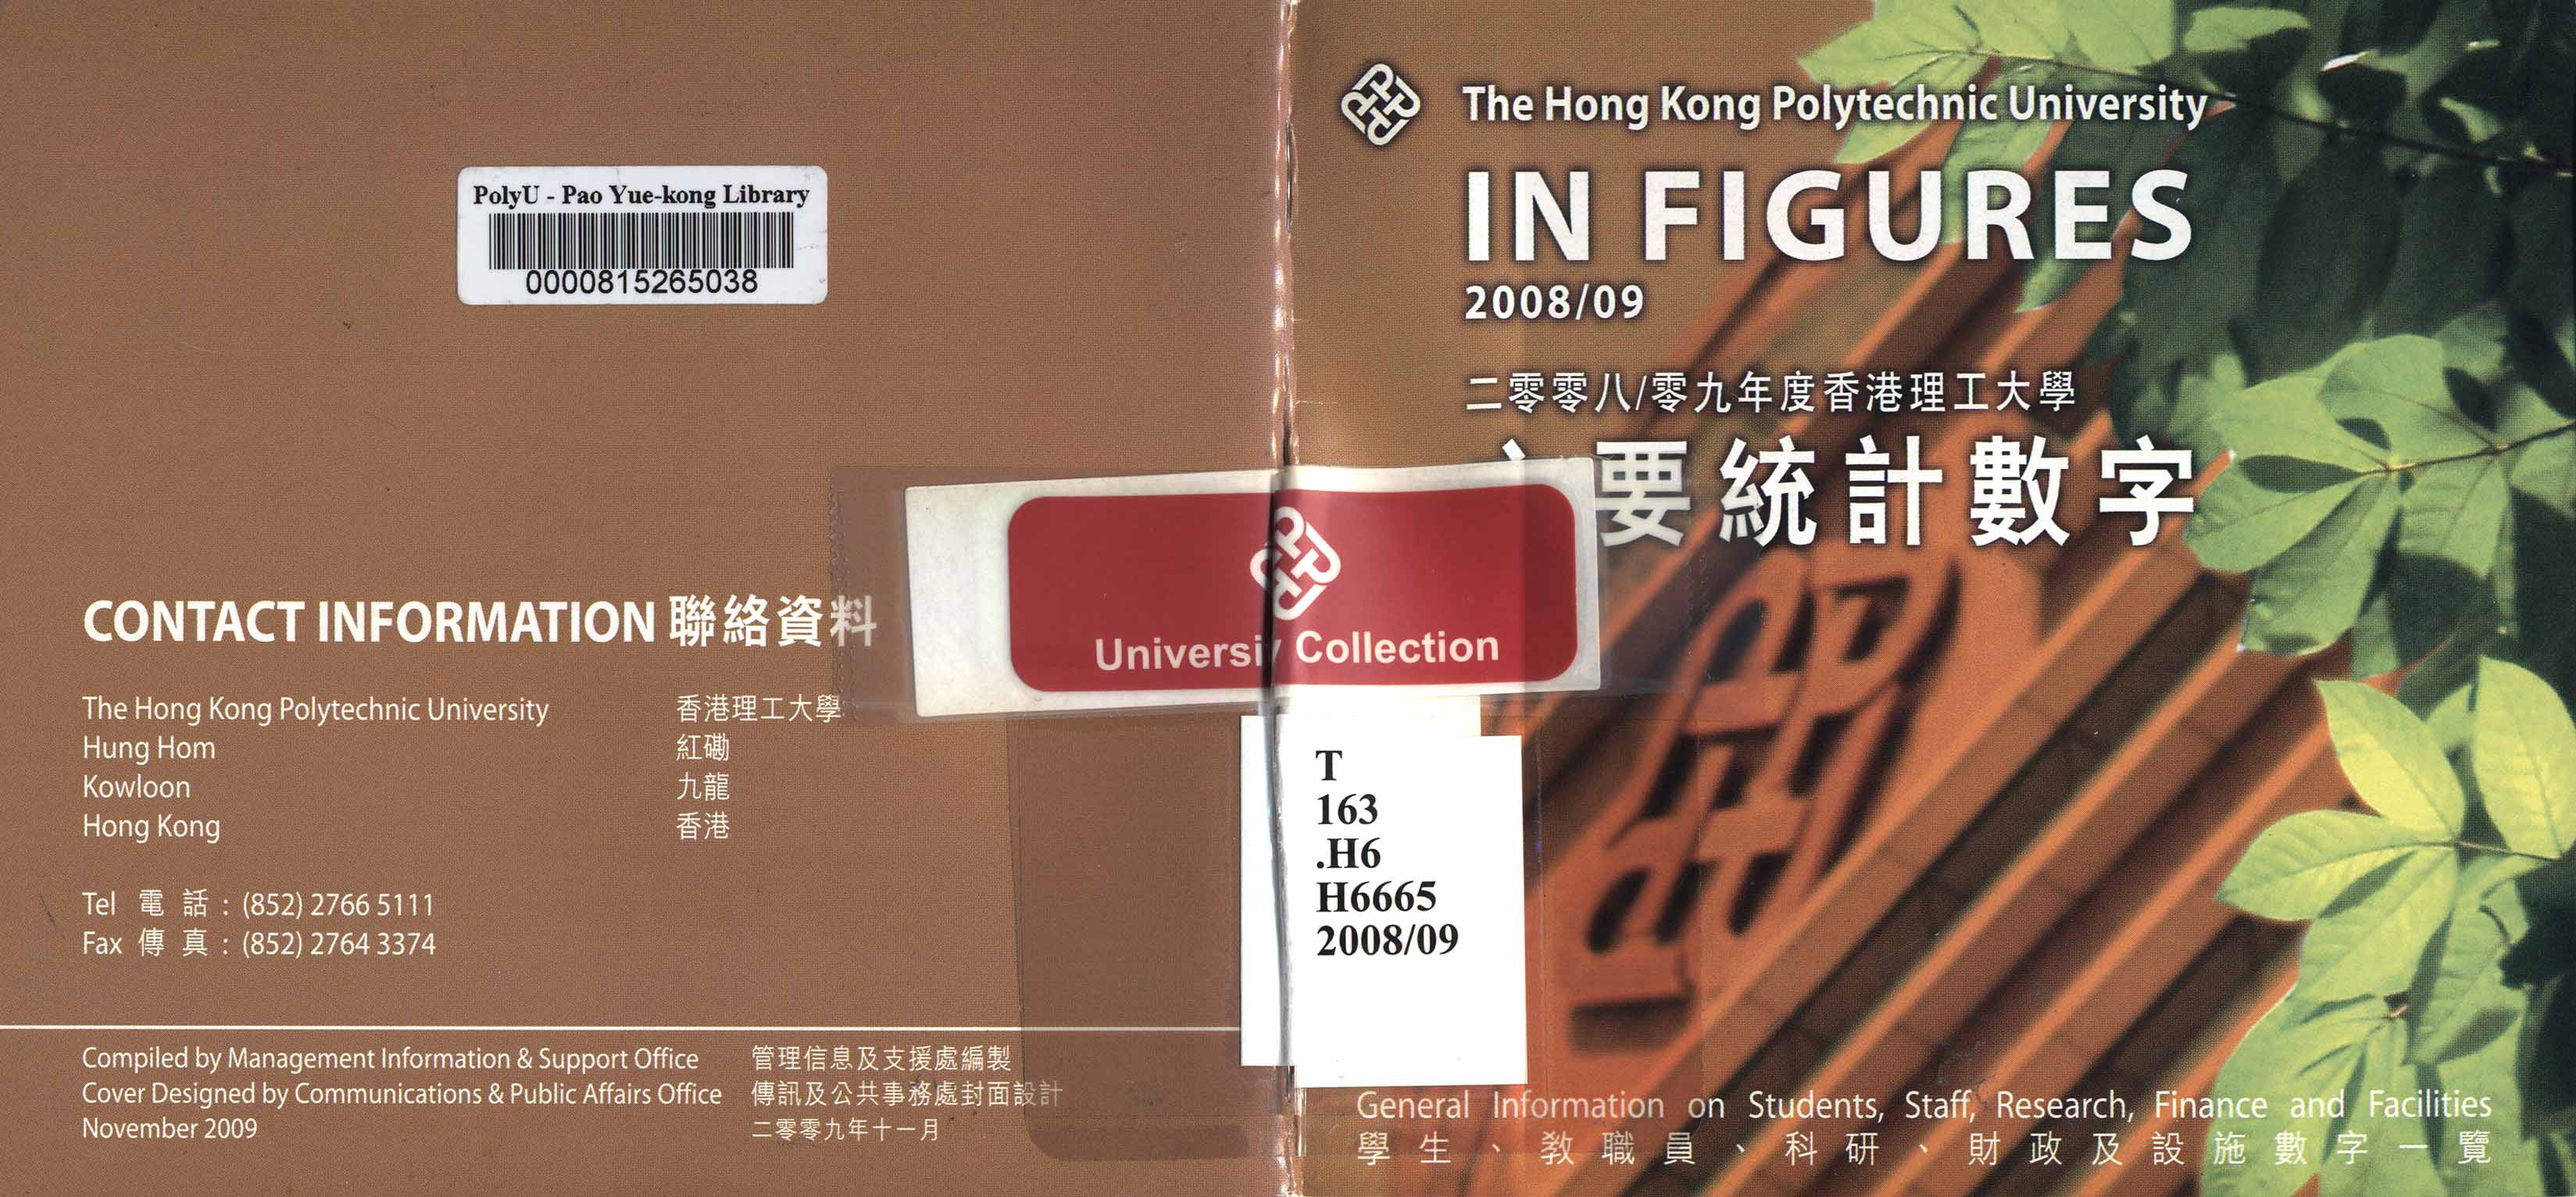 The Hong Kong Polytechnic University in figures 2008/09